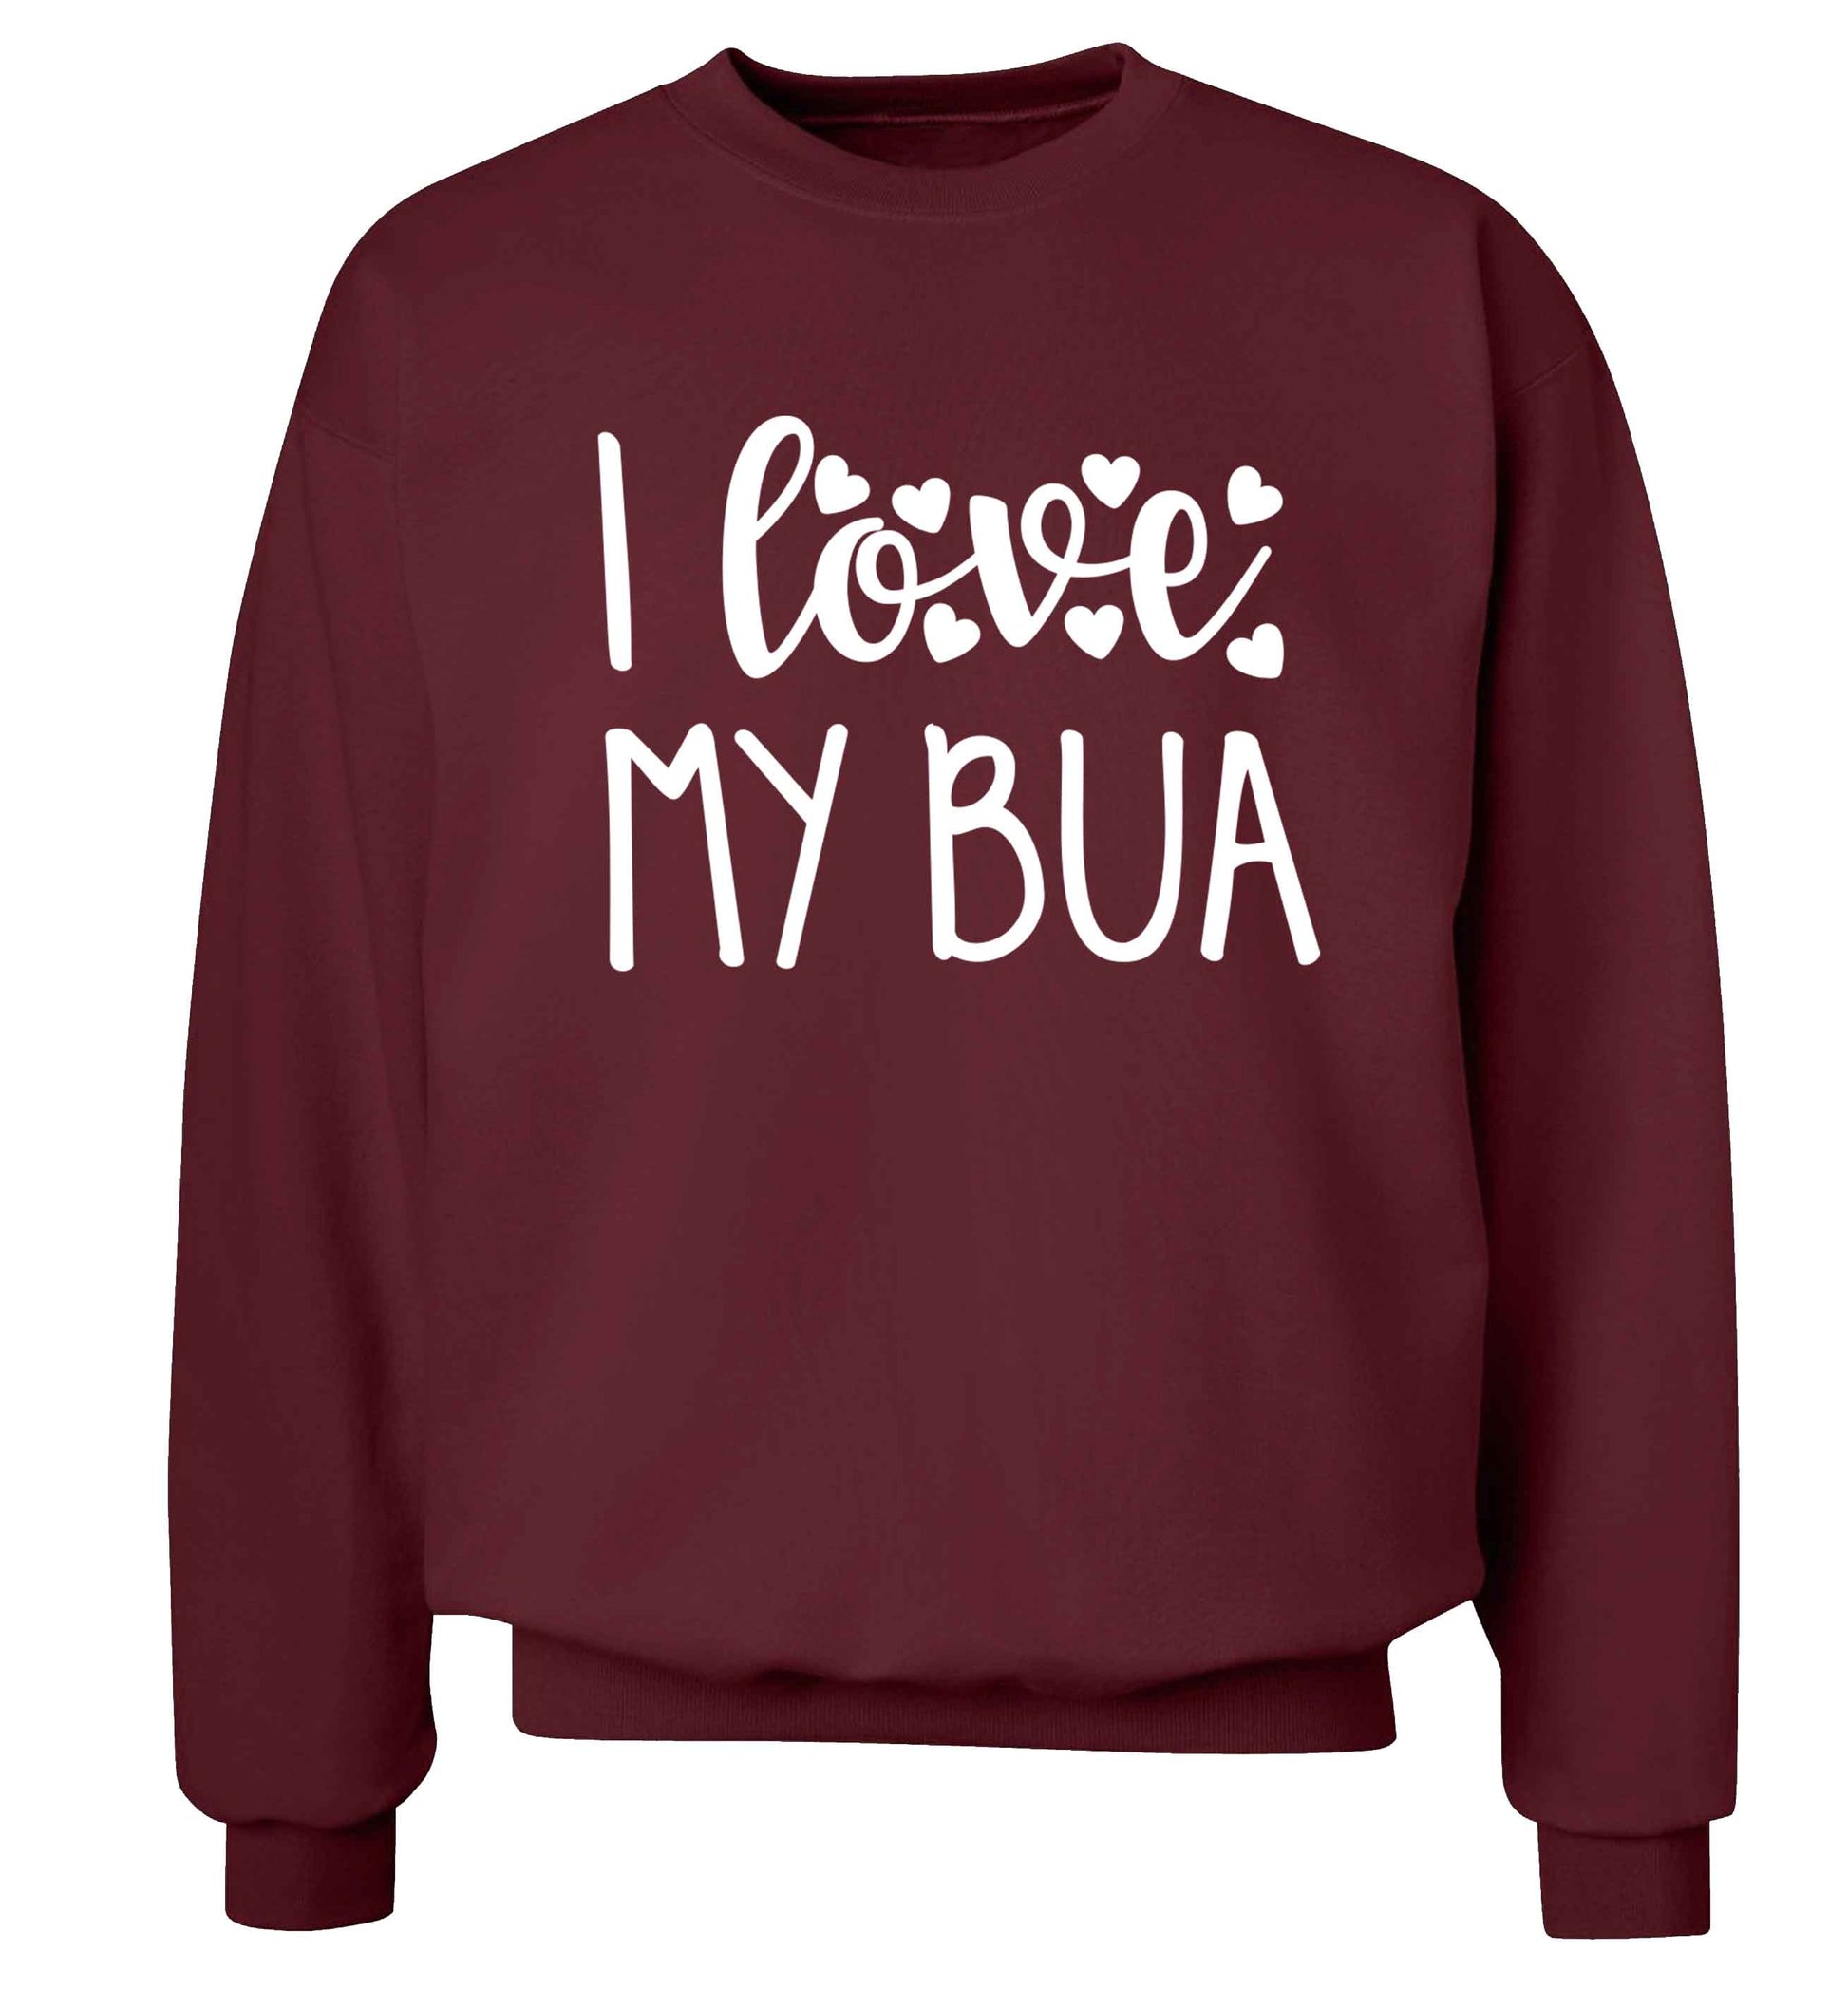 I love my bua Adult's unisex maroon Sweater 2XL